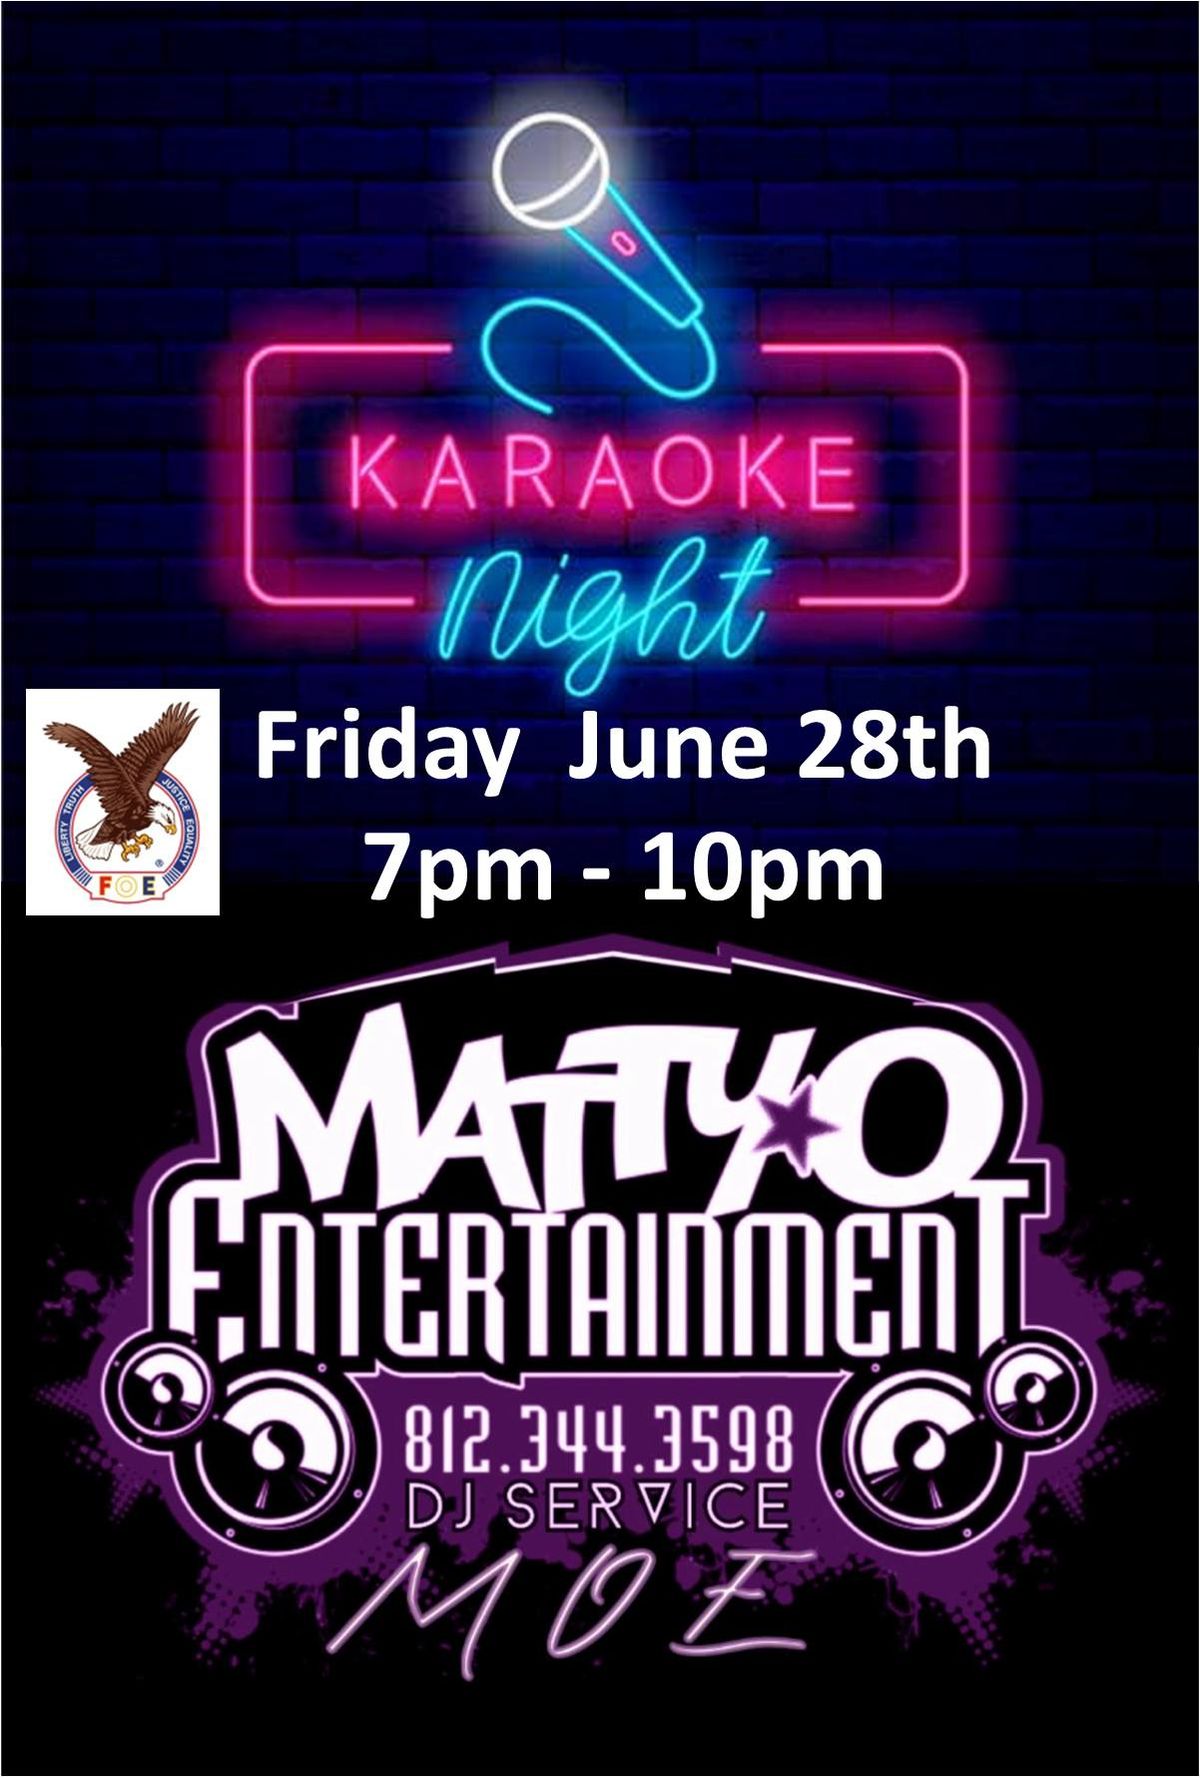 Karaoke Night with Matty O Entertainment